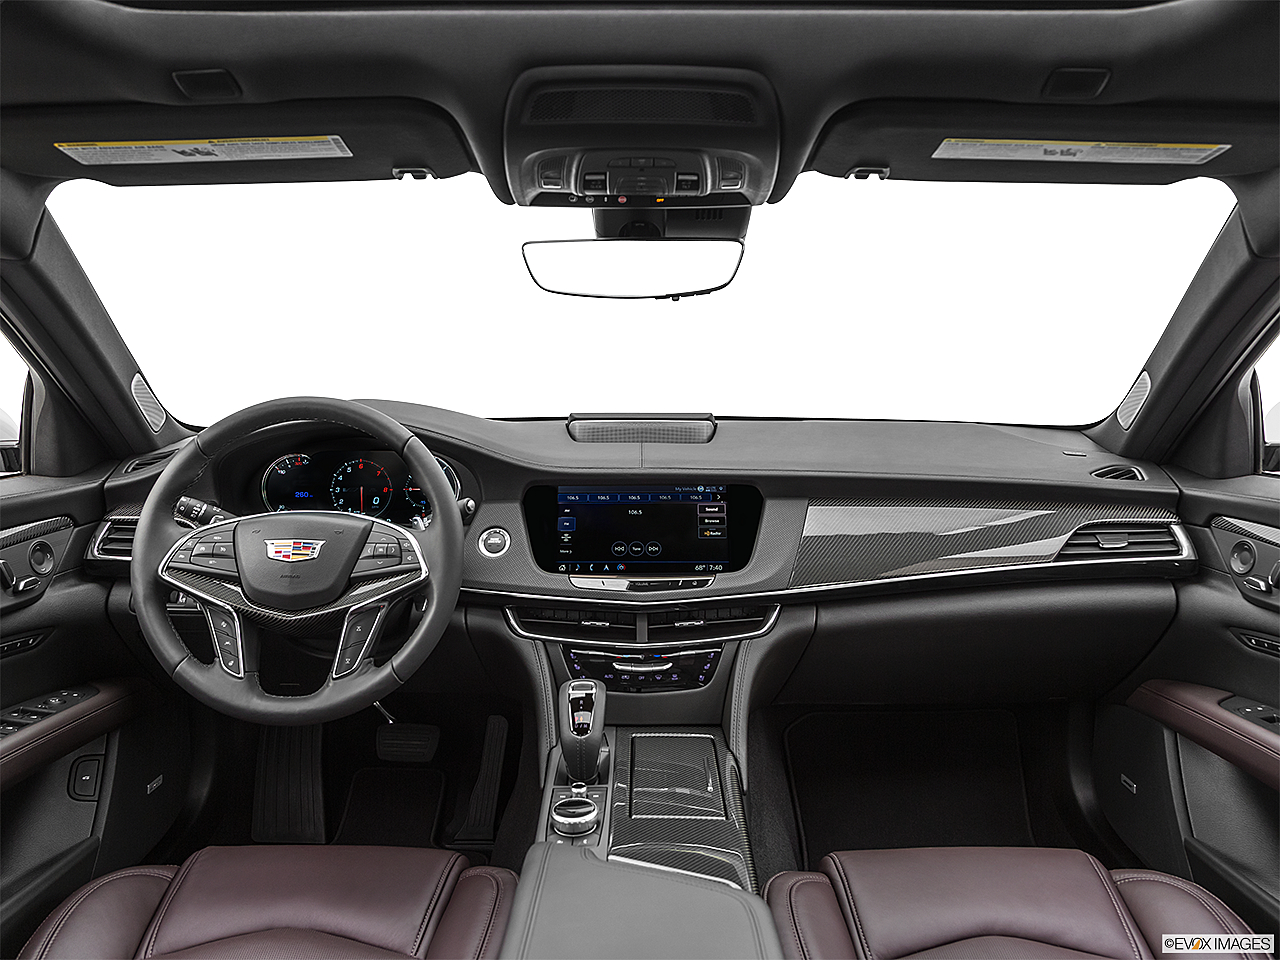 2019 Cadillac CT6-V AWD 4.2TT 4dr Sedan - Research - GrooveCar